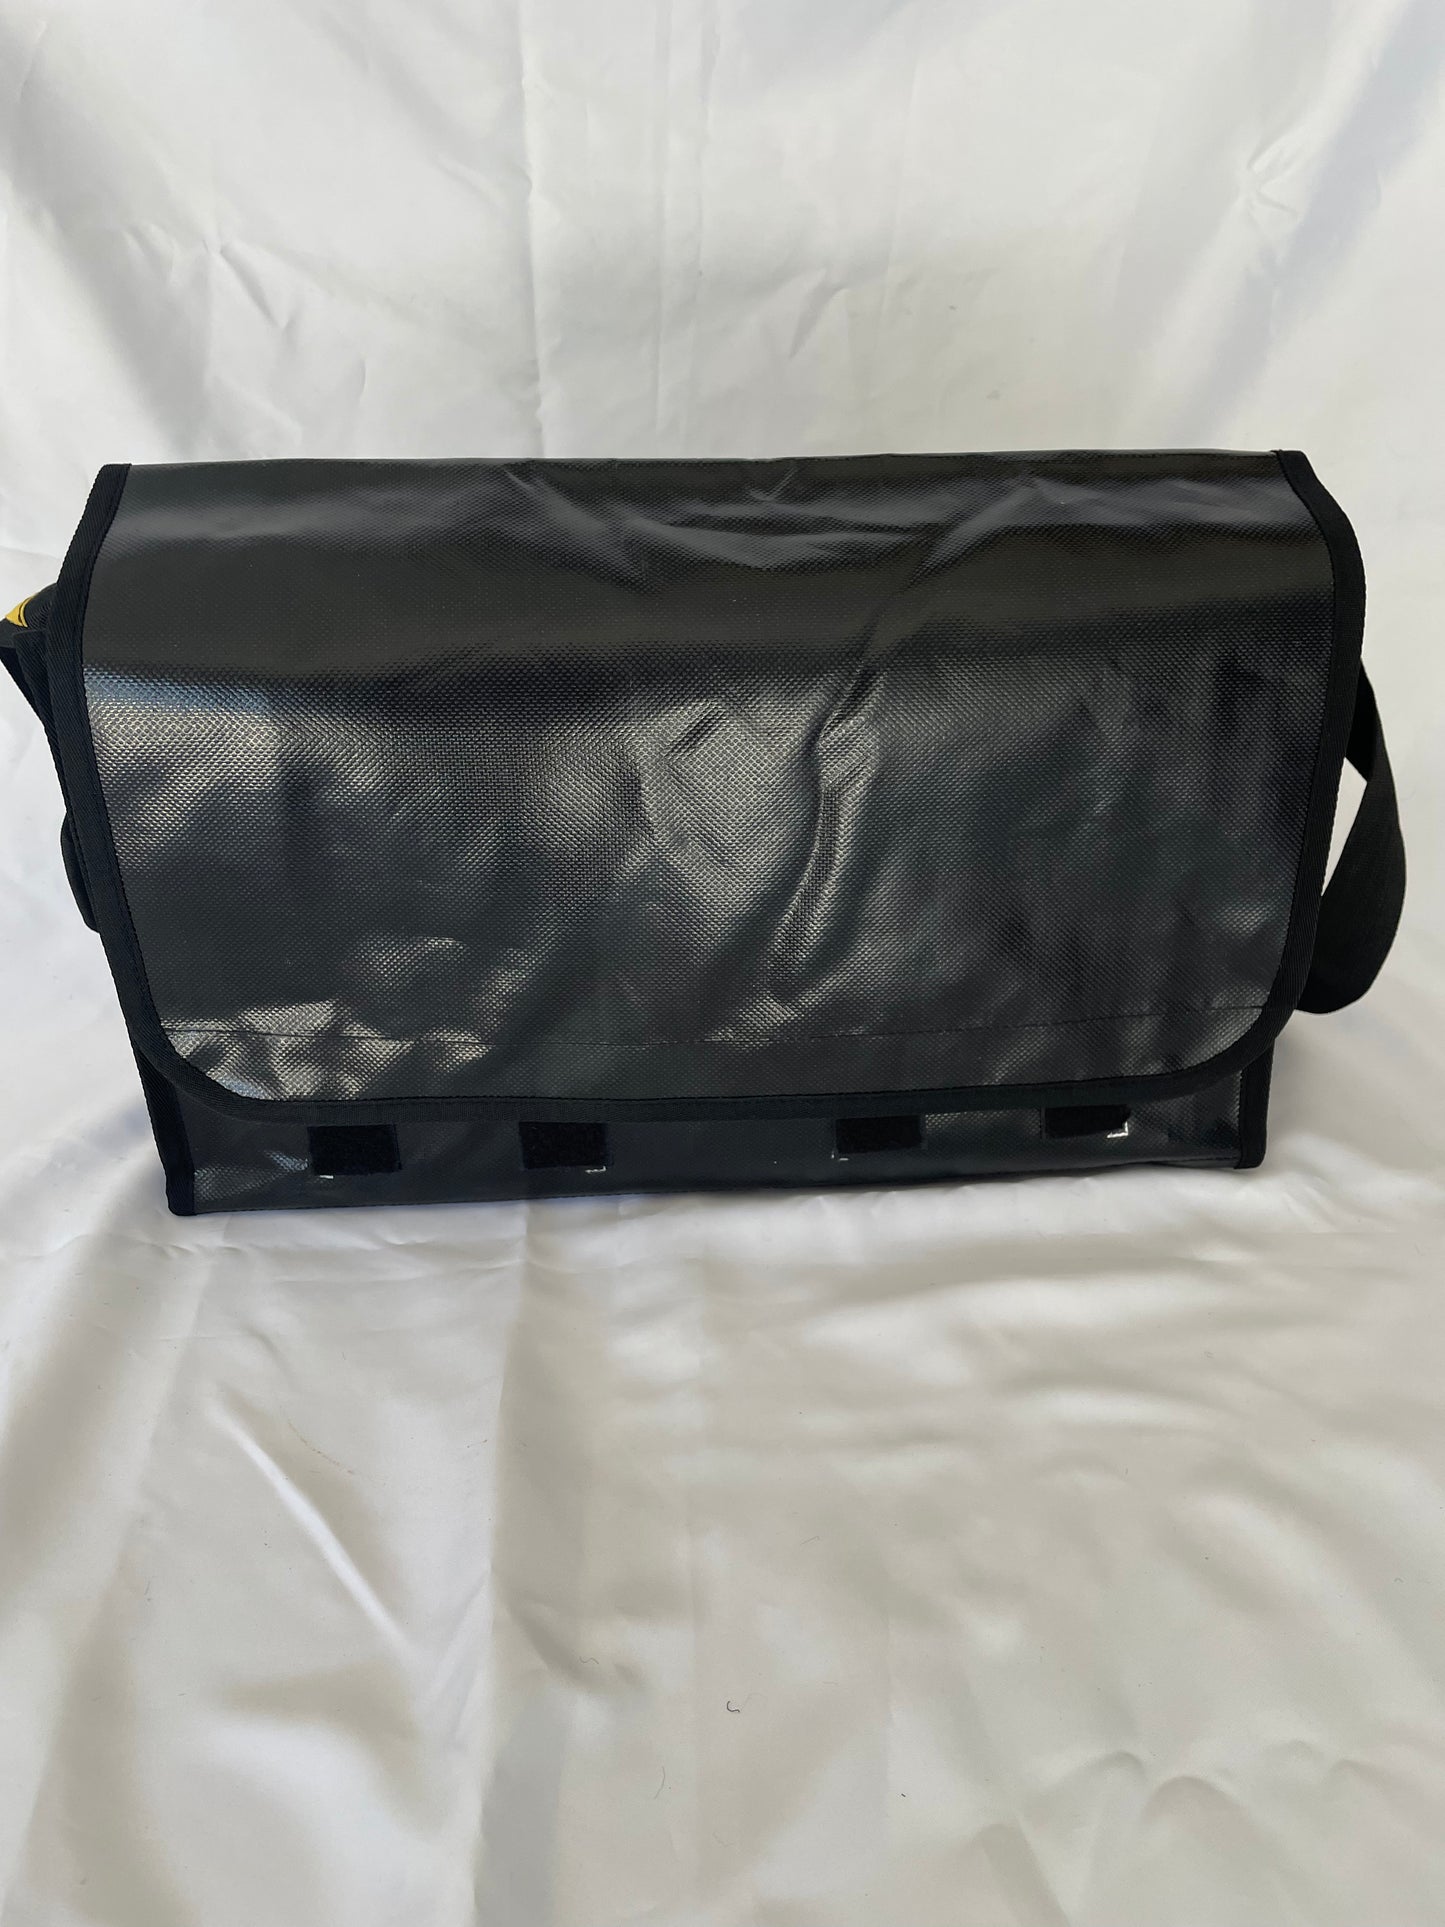 CribBags Small Black and Blue Crib bag. Tough Vinyl Construct, Document pocket inside